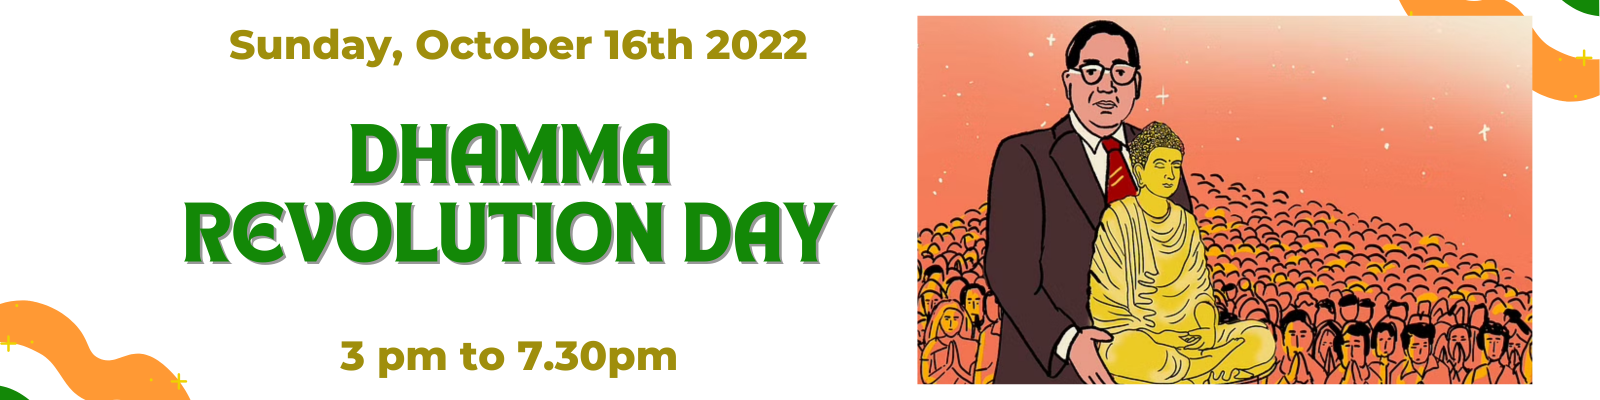 Dhamma revolution day